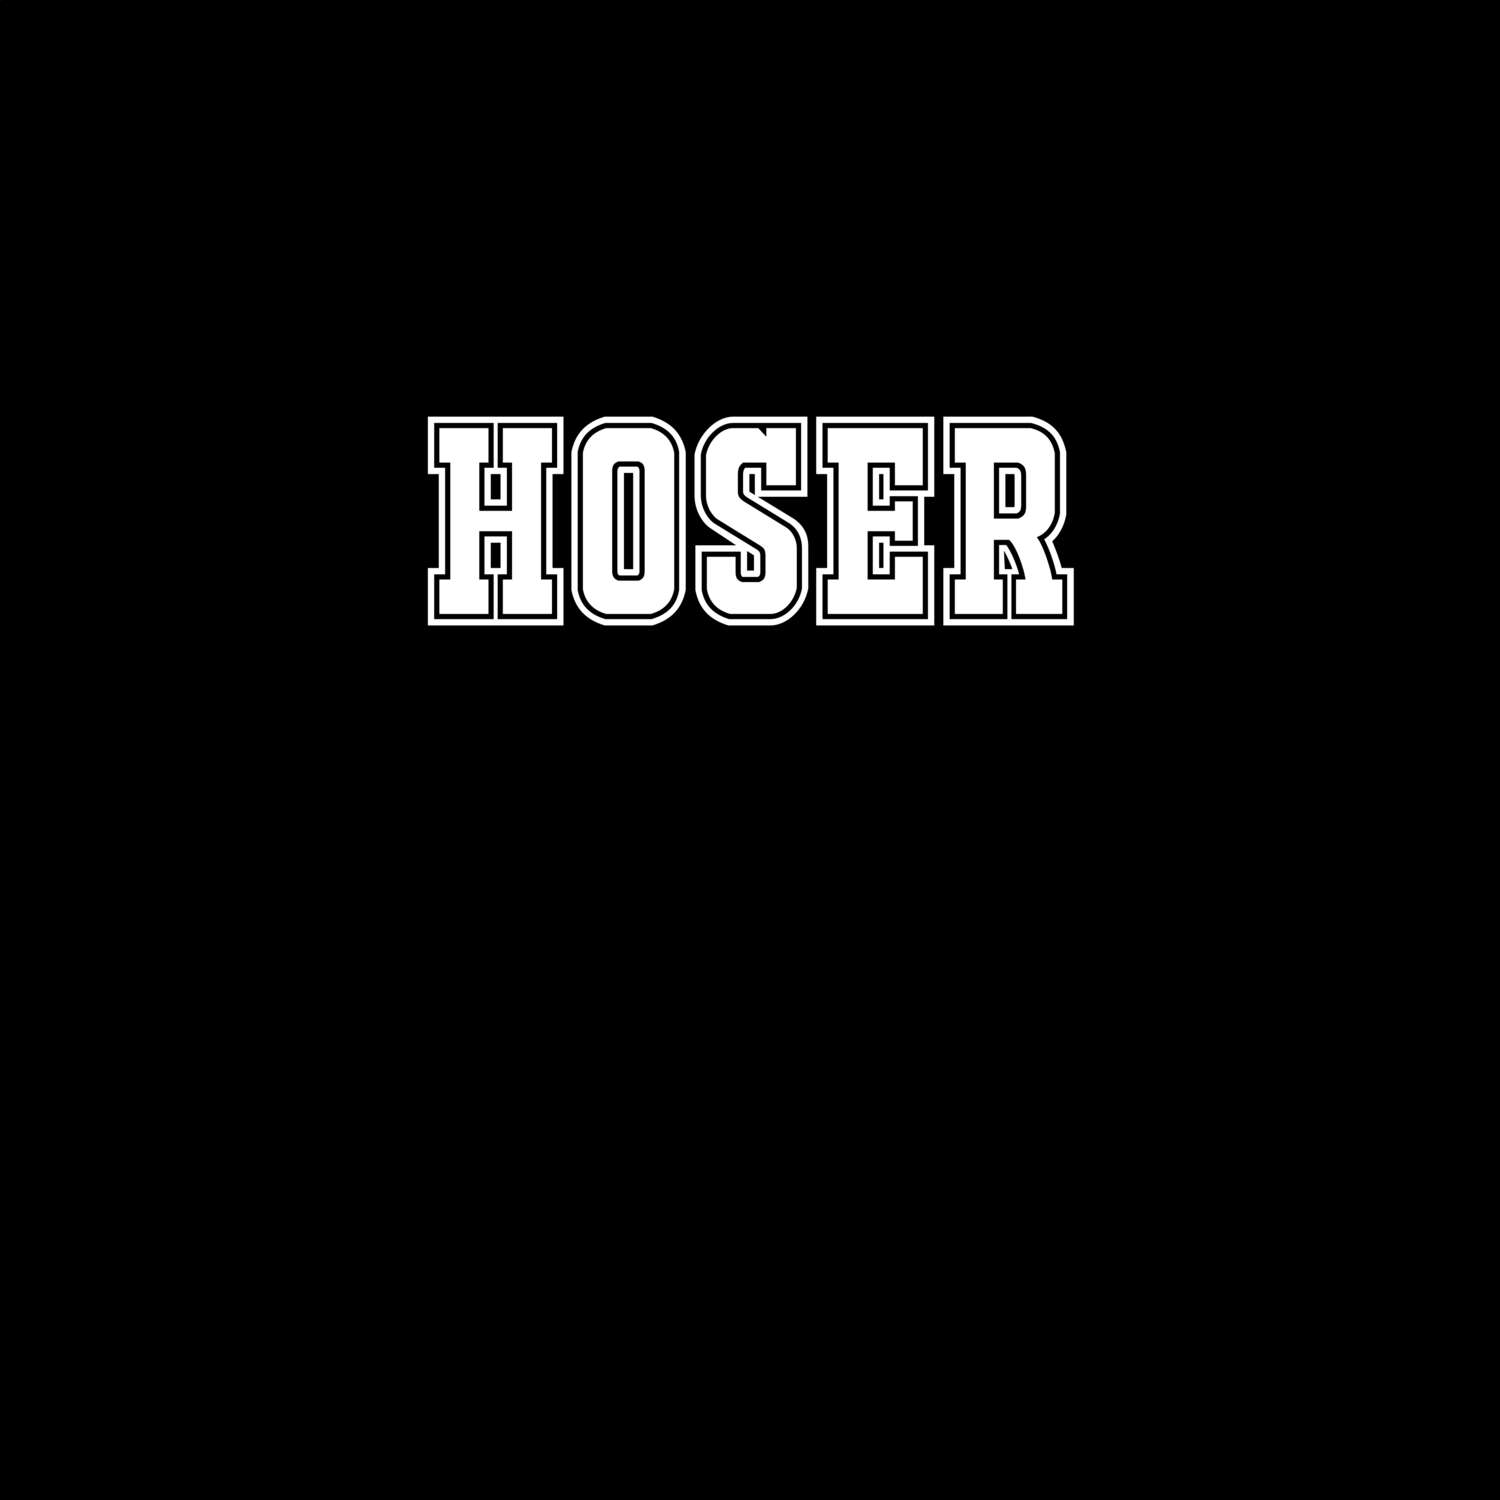 Hoser T-Shirt »Classic«